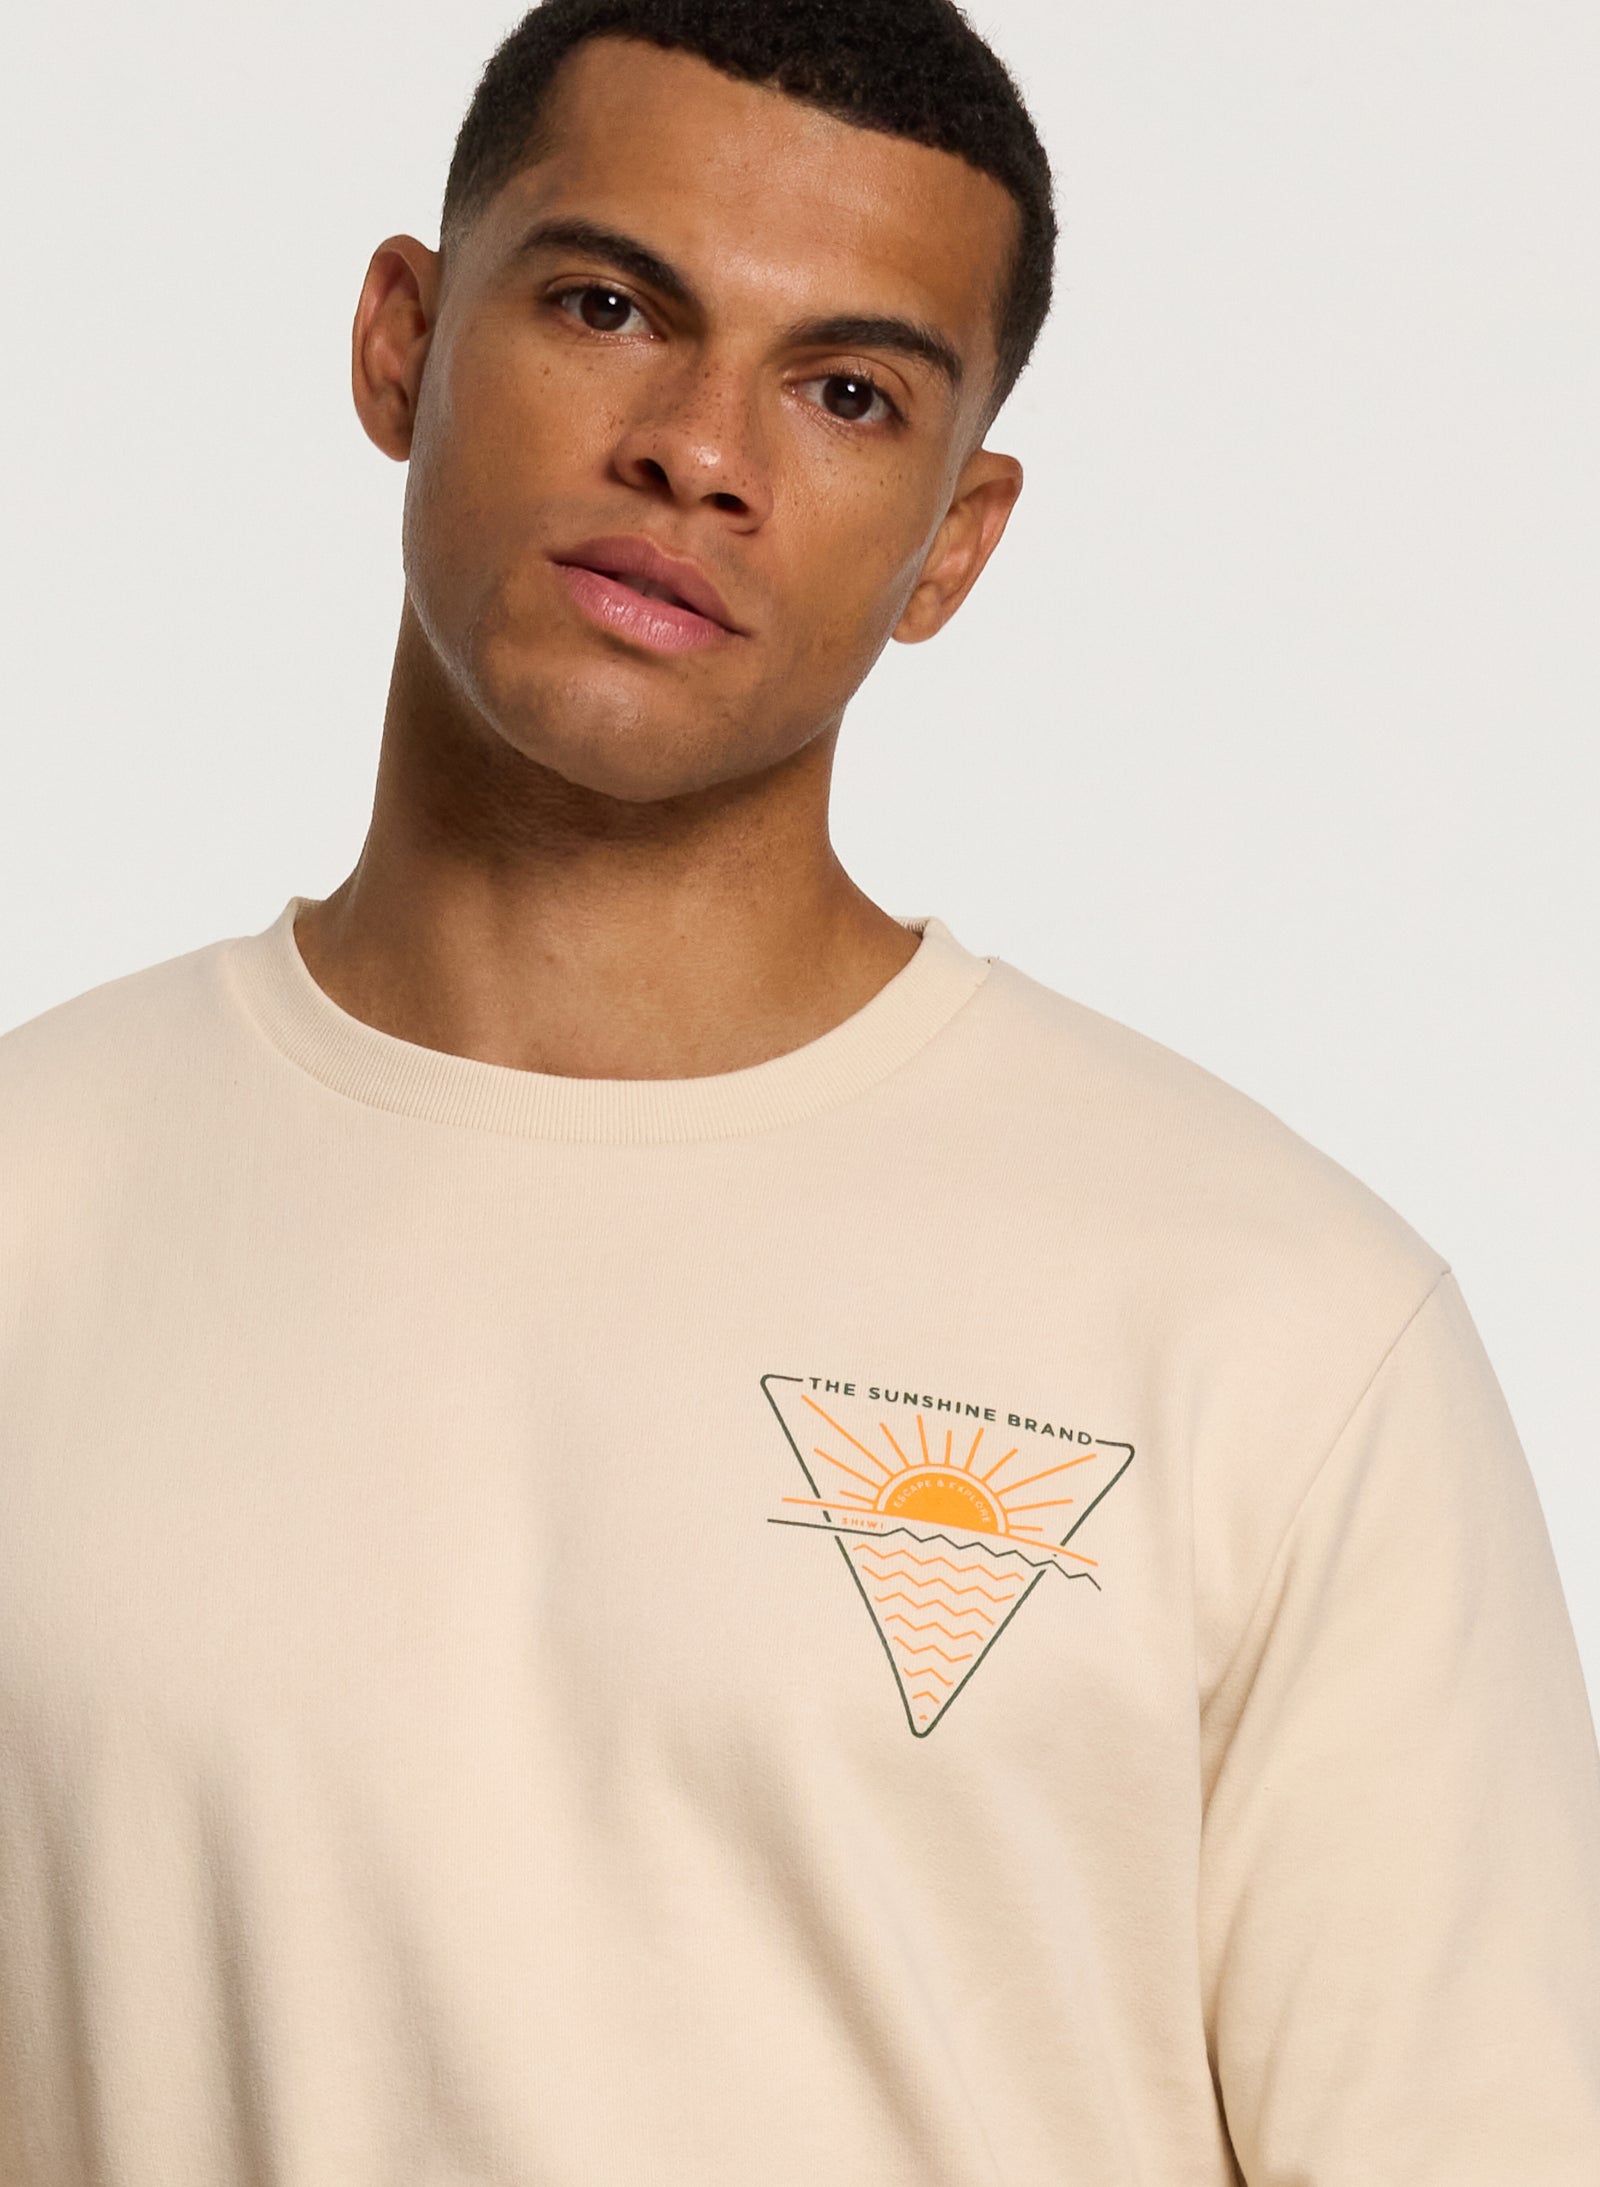 Men Triangle sweater